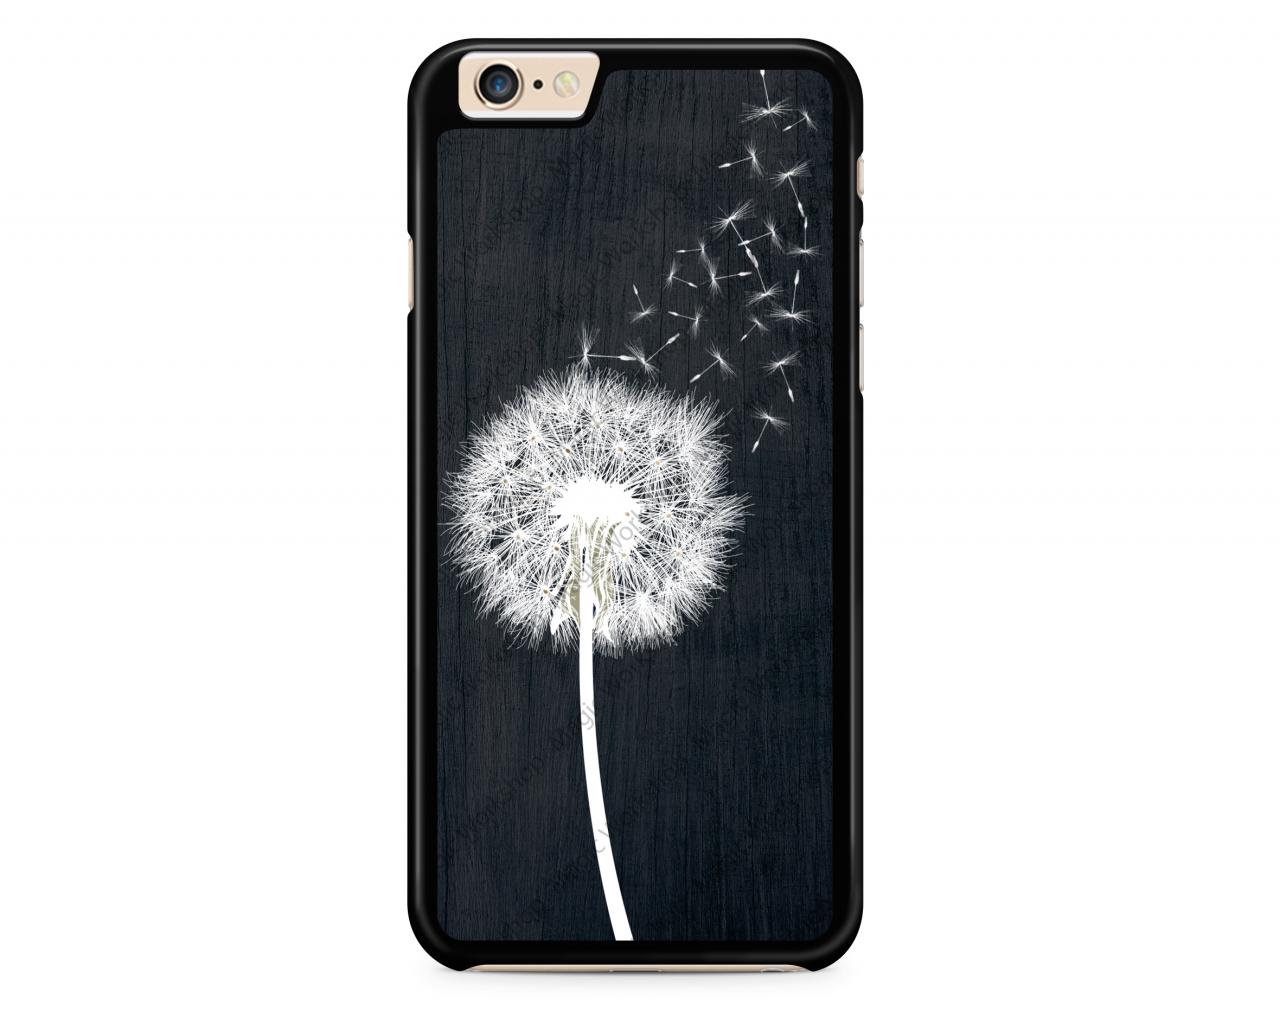 Dandelion On Black Wood Design Case For Iphone 4 4s 5 5s 5c 6 6 Plus 6s 6s Plus, Samsung Galaxy S3 S4 S5 S6 S6 Edge S7 S7 Edge Lg G3, Lg G4, Htc